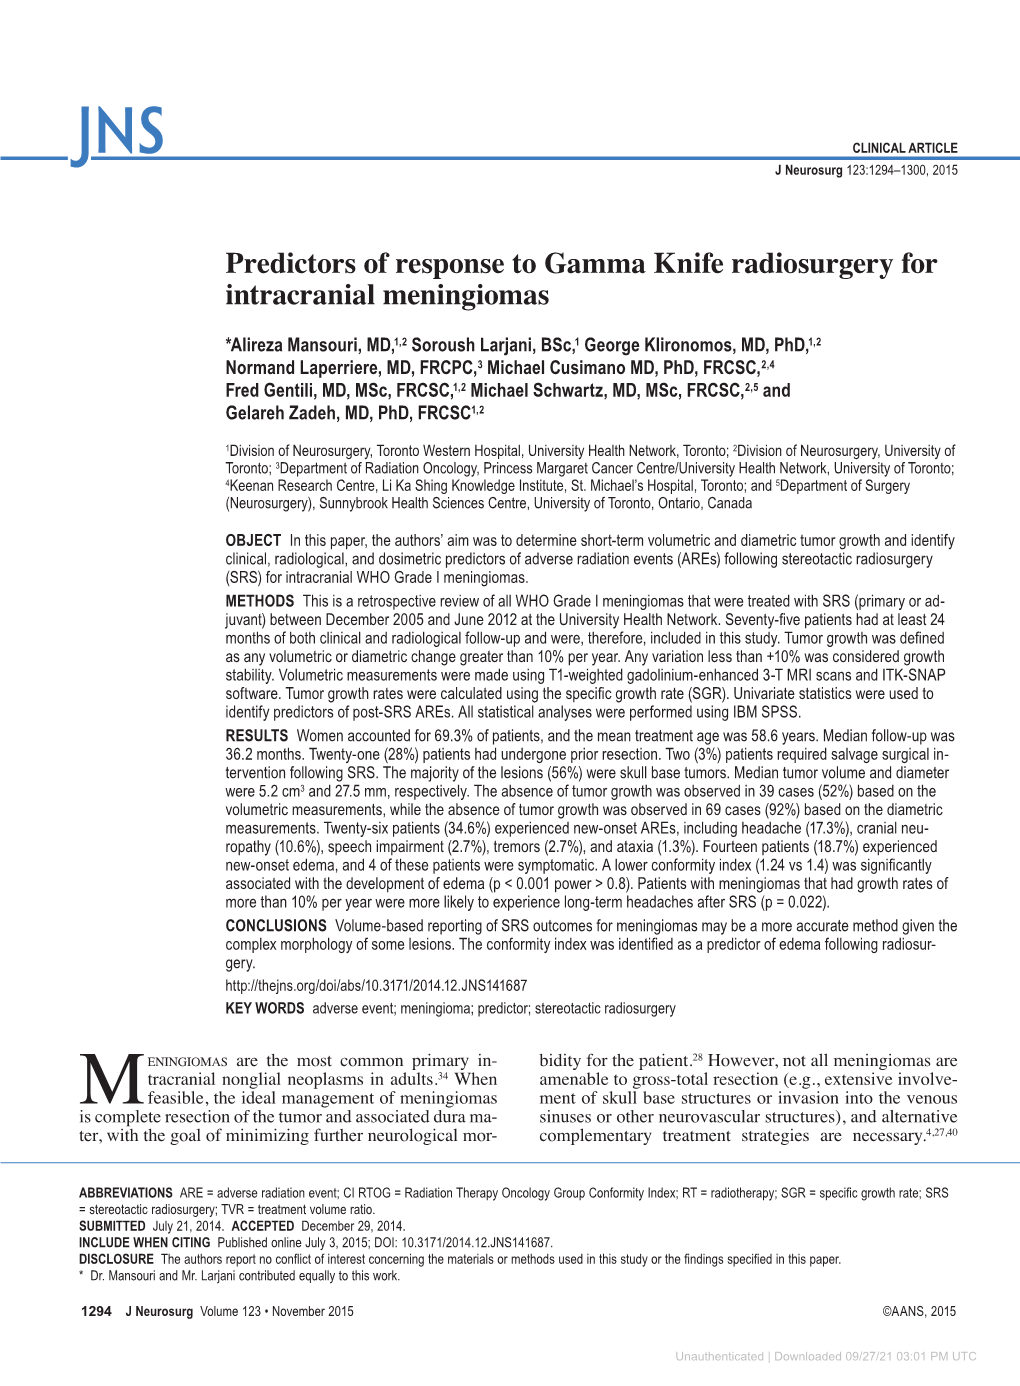 Predictors of Response to Gamma Knife Radiosurgery for Intracranial Meningiomas